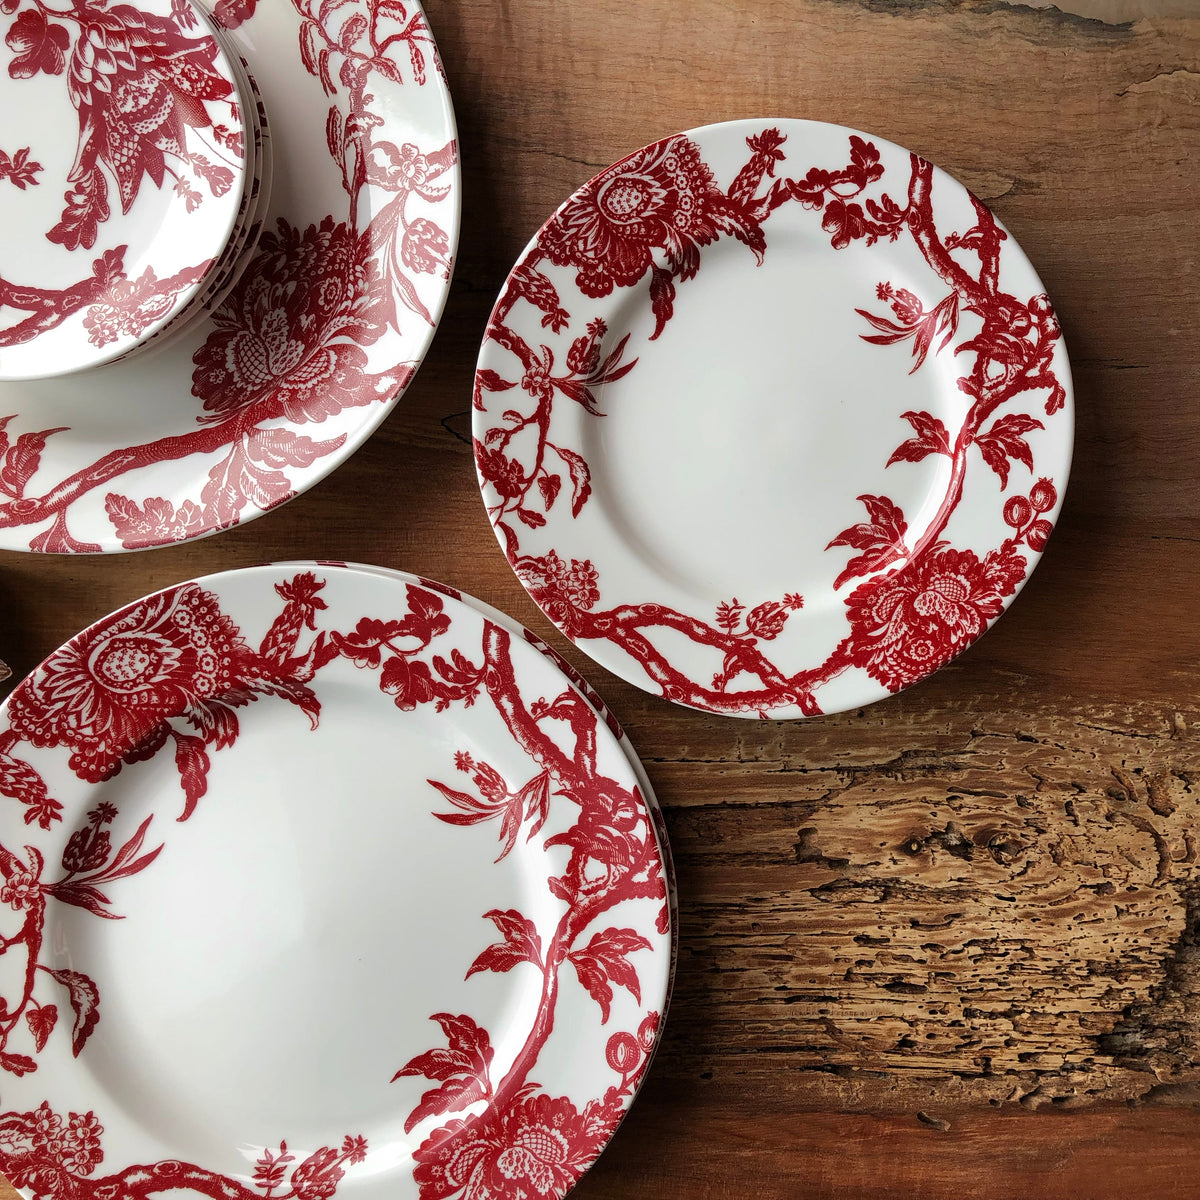 A set of Arcadia Crimson Rimmed Dinner Plates by Caskata Artisanal Home on a wooden table.